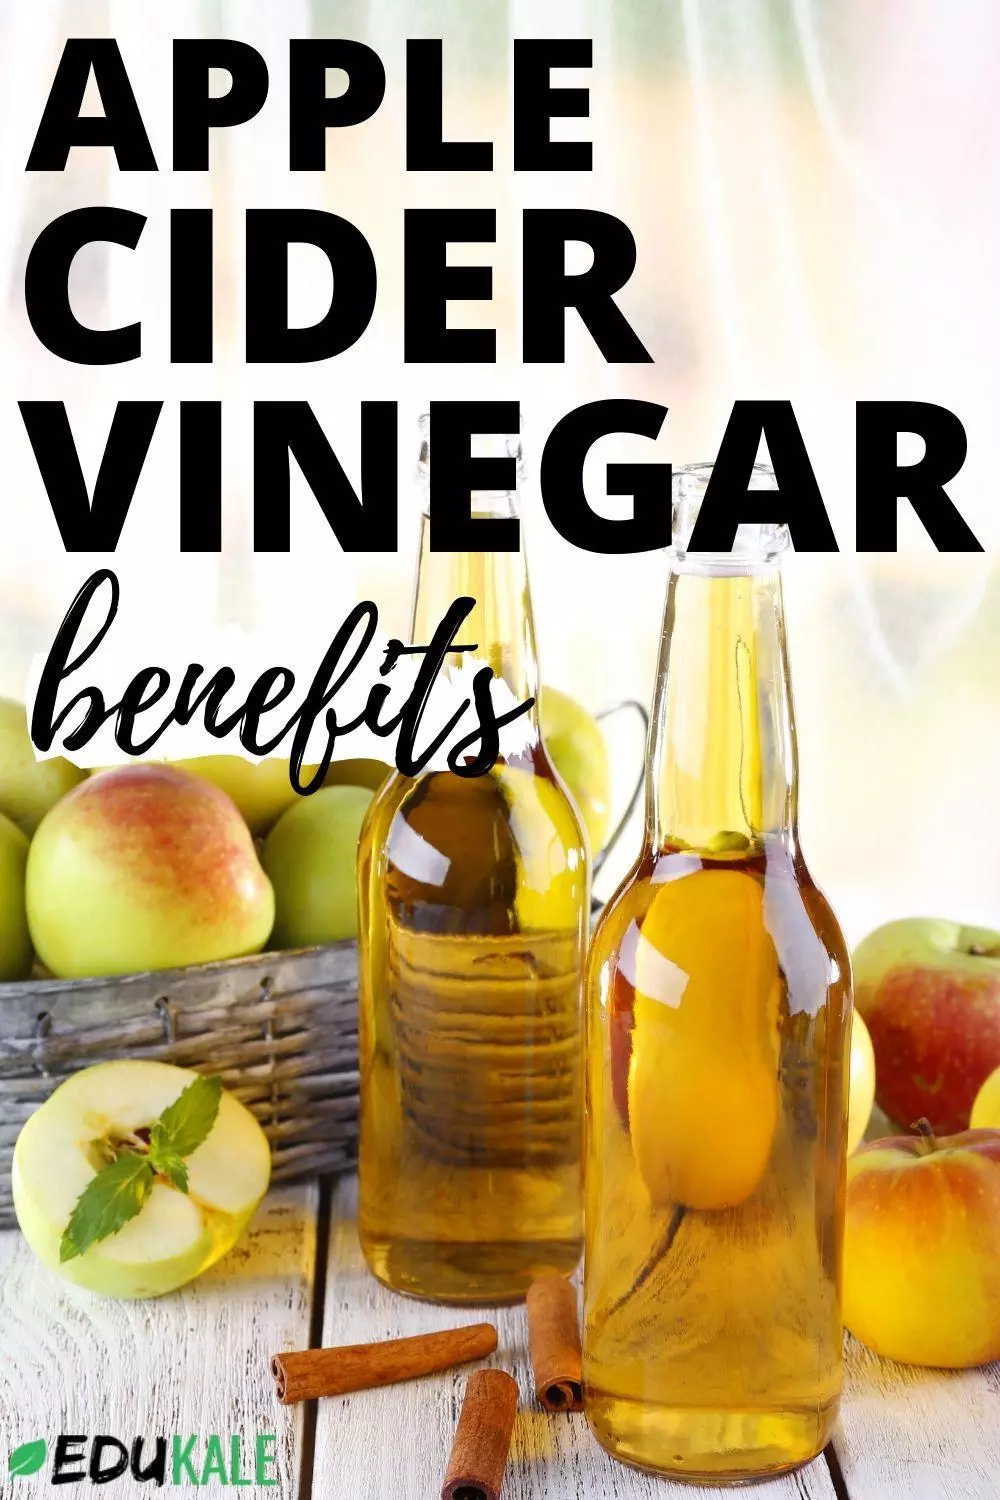 Surprising health benefits of apple cider vinegar